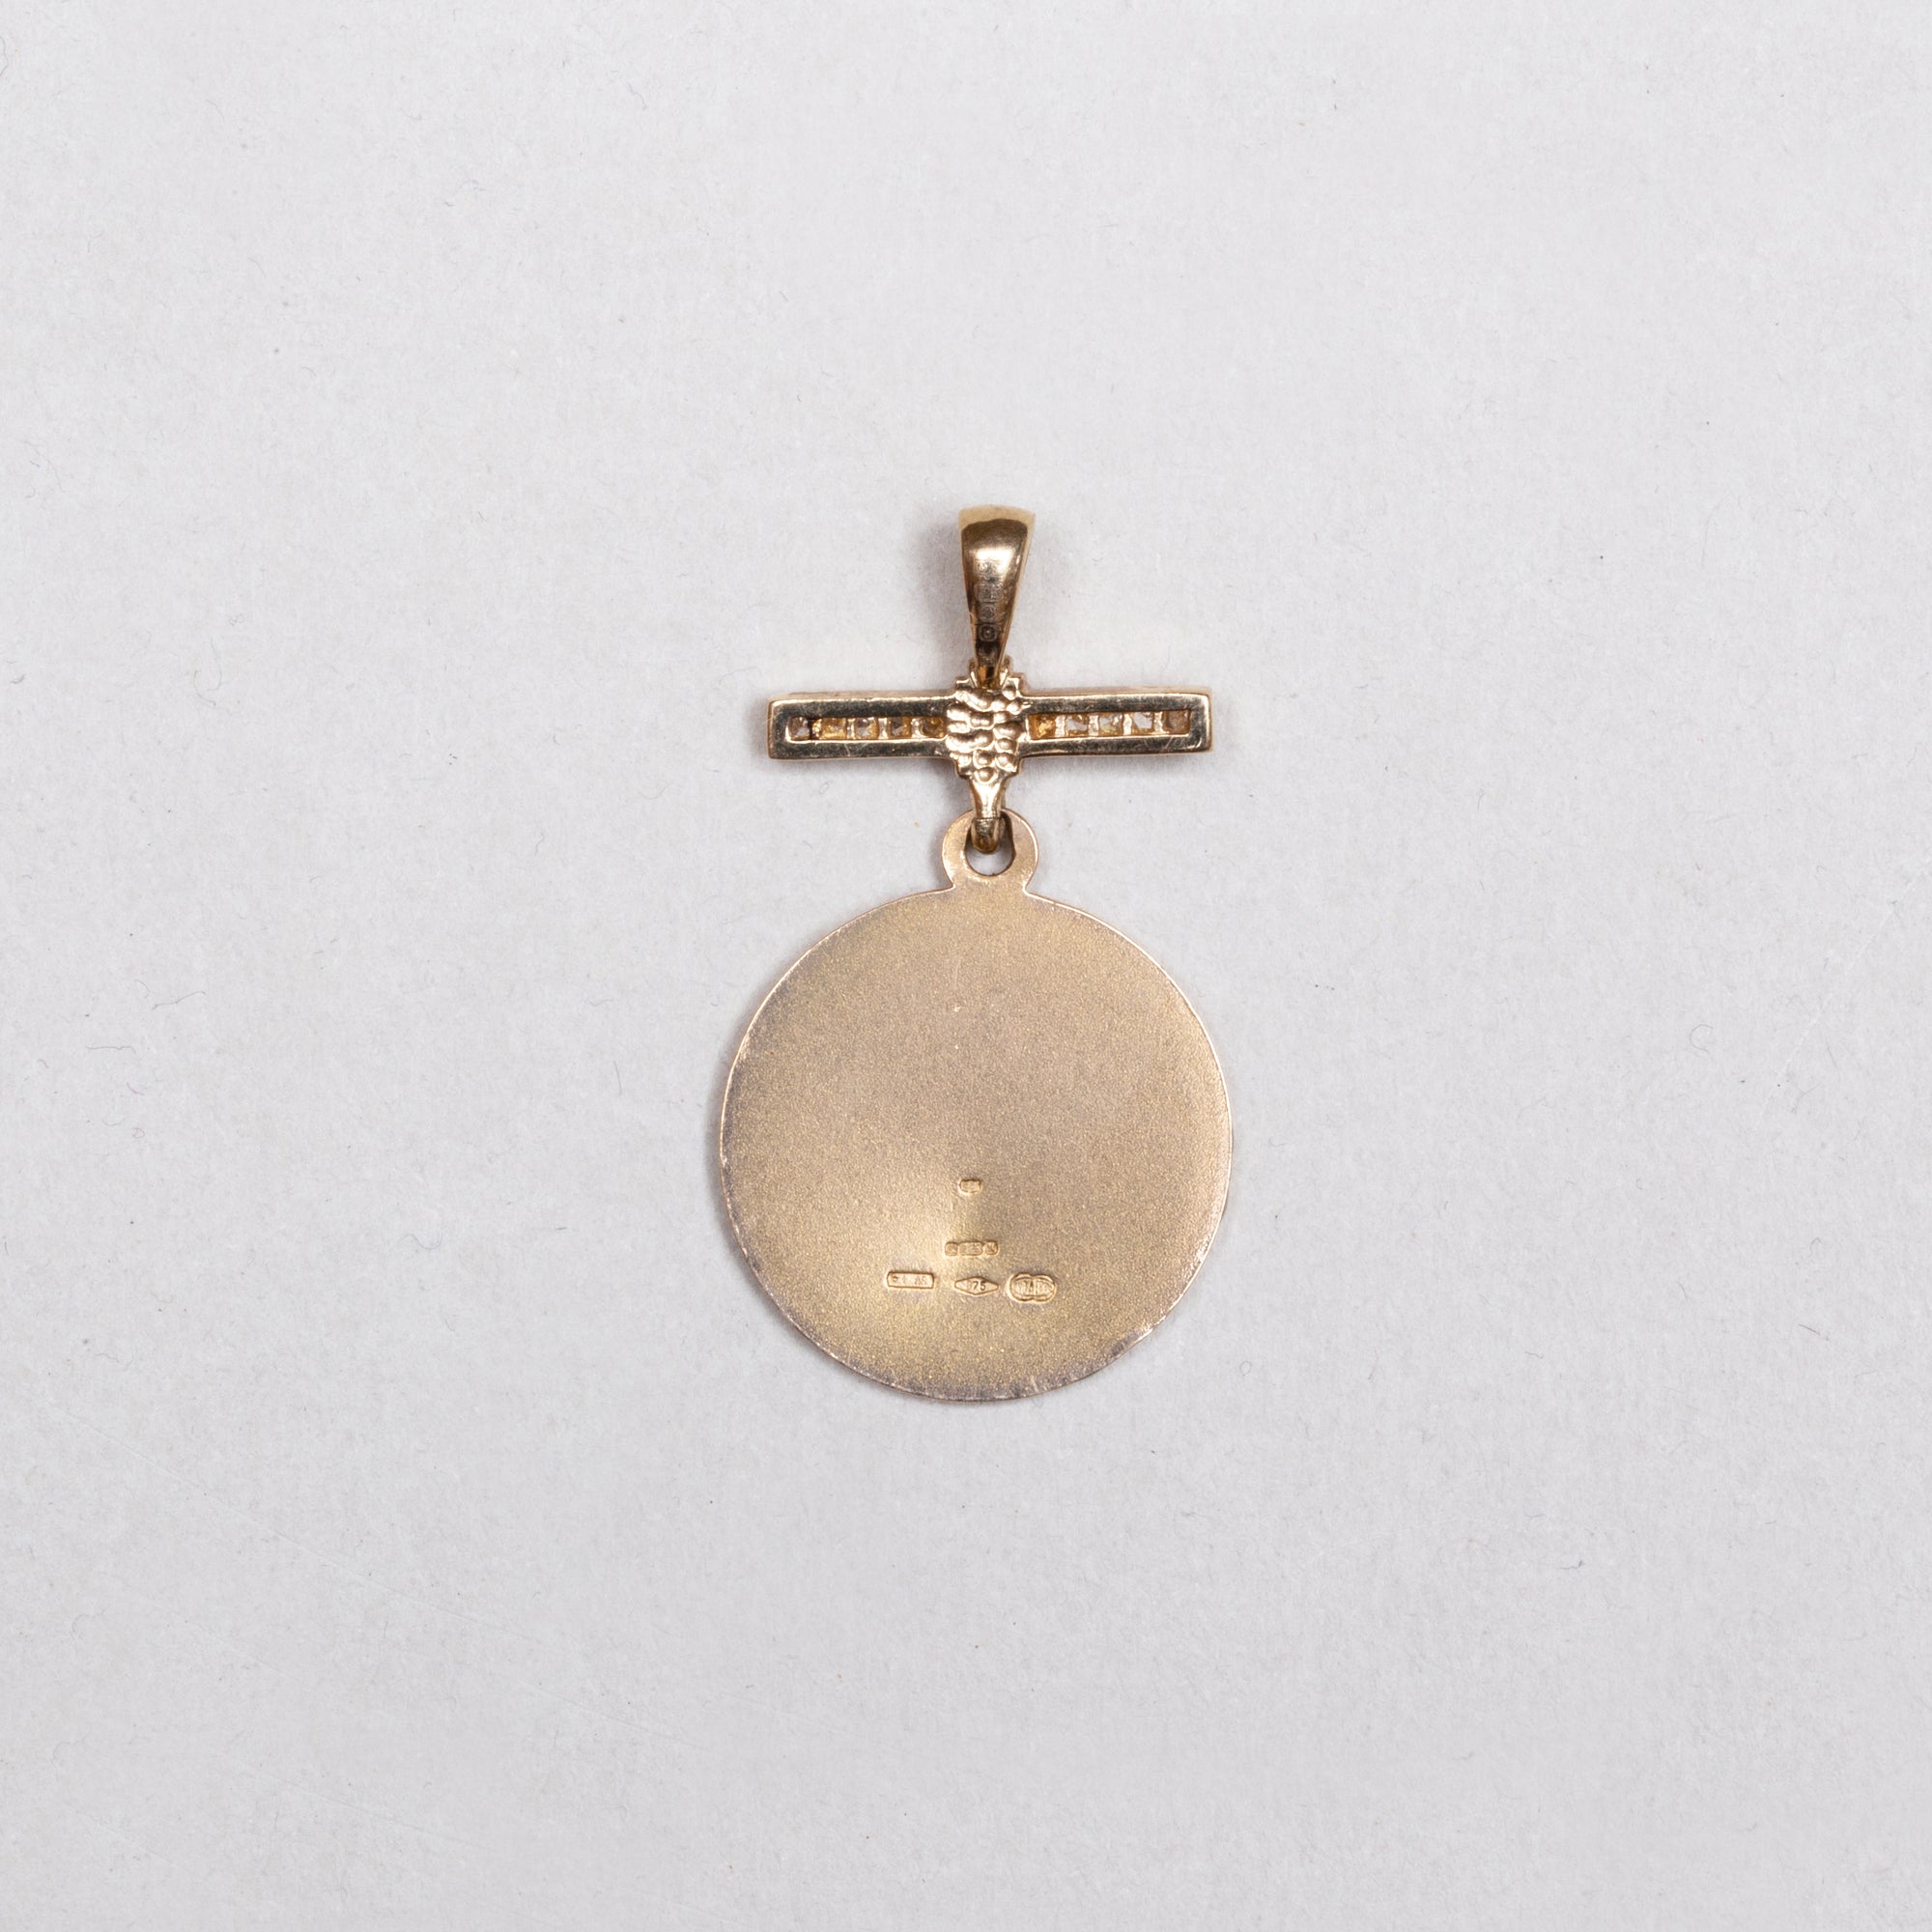 Rare Vintage 9ct Gold St. Christopher Pendant Charm with Diamond Cross